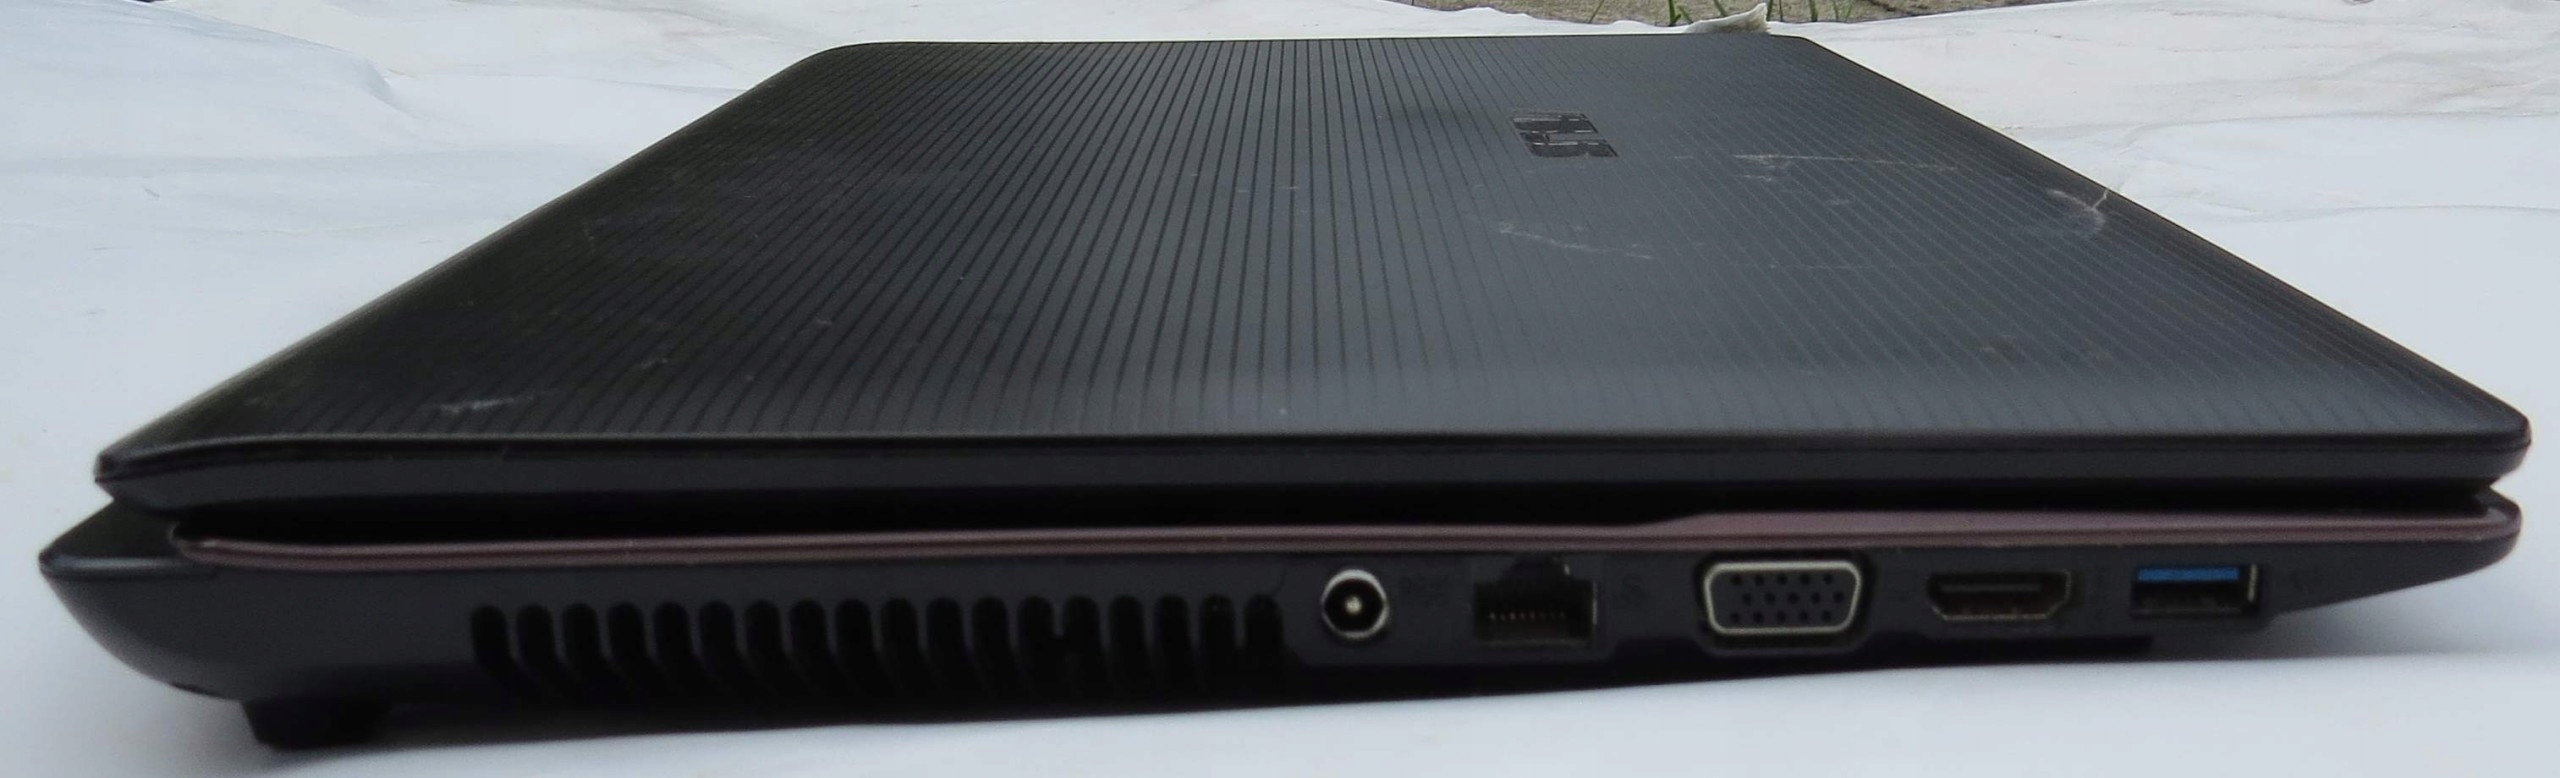 Asus X53S K53SV i7-2670QM GT540M 4GB 500G Laptop ...